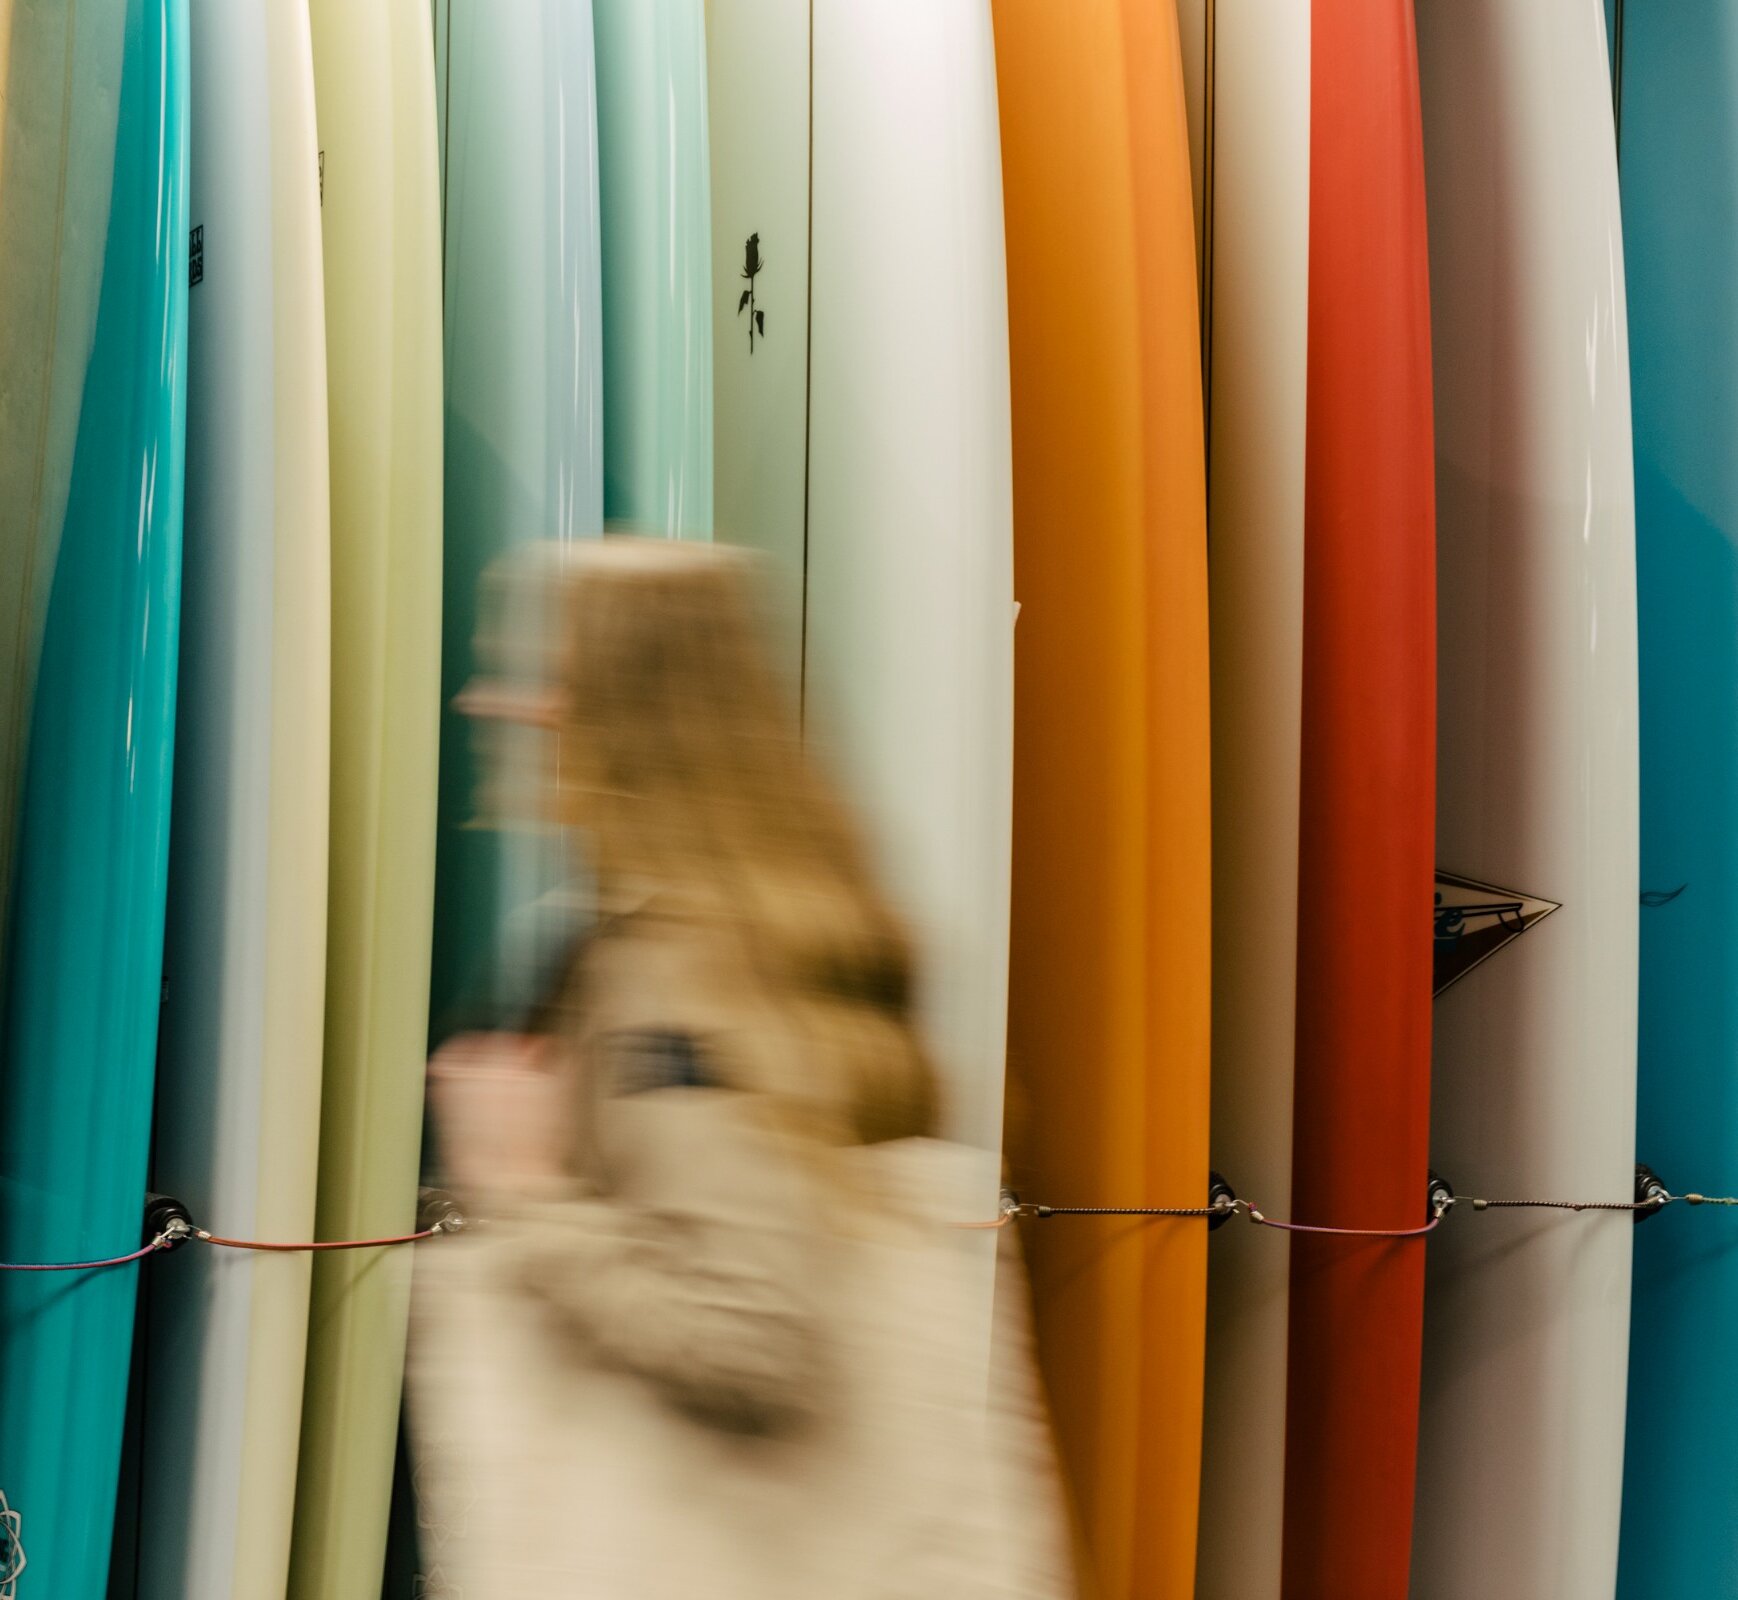 Rack of surf boards in a surf shop